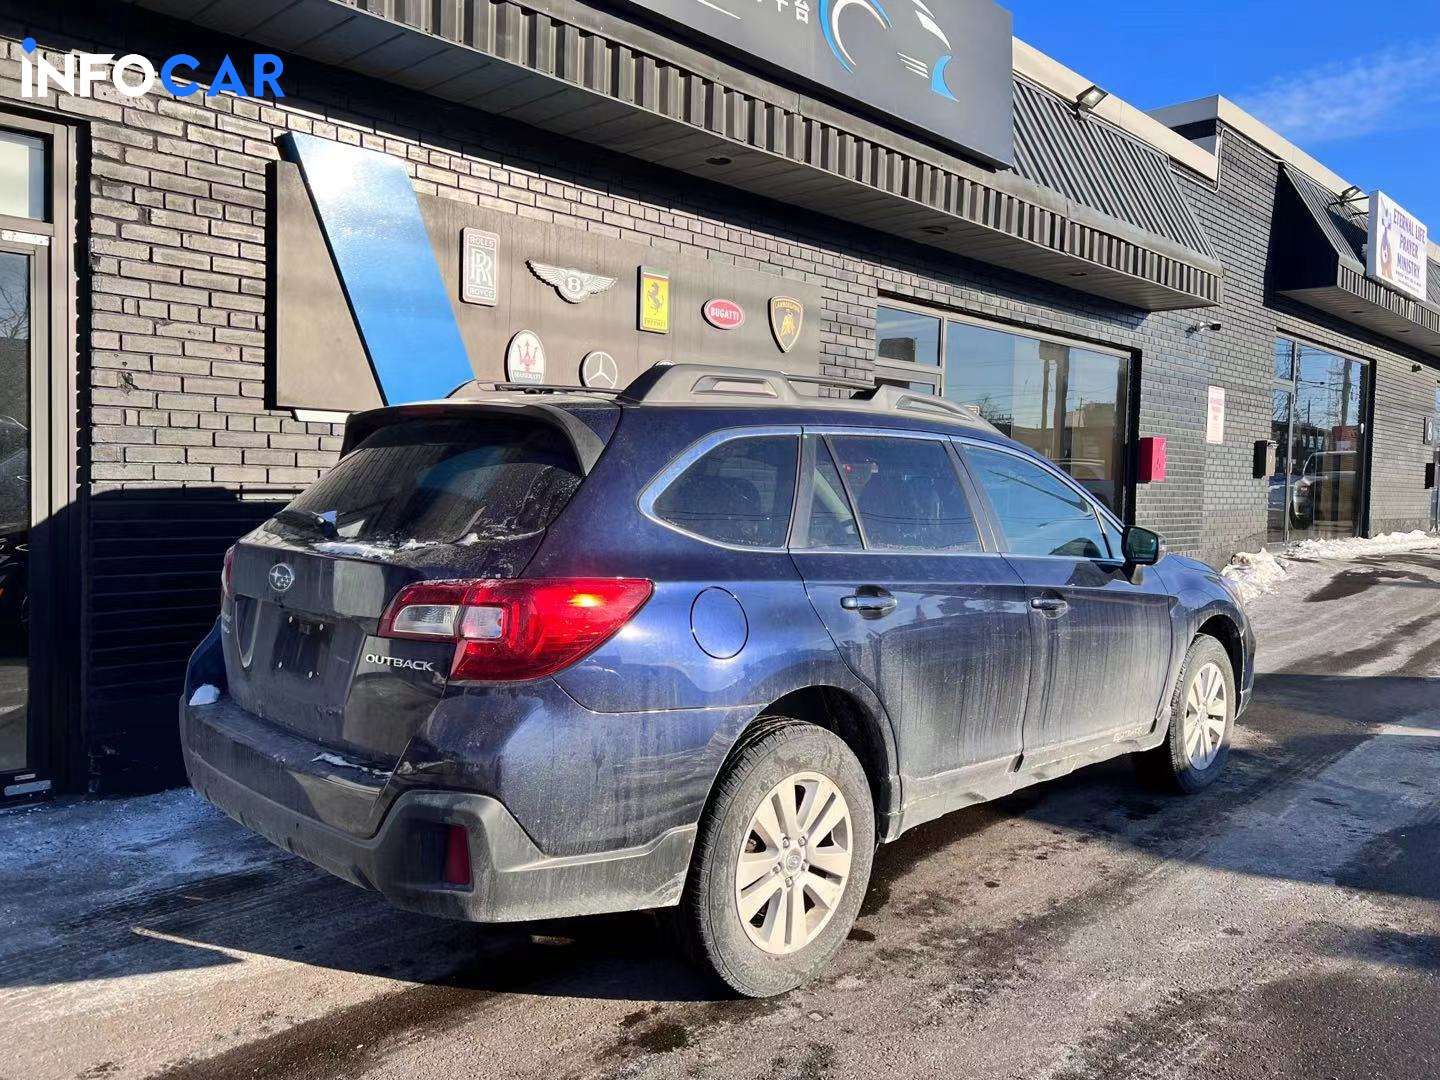 2018 Subaru Outback null - INFOCAR - Toronto Auto Trading Platform